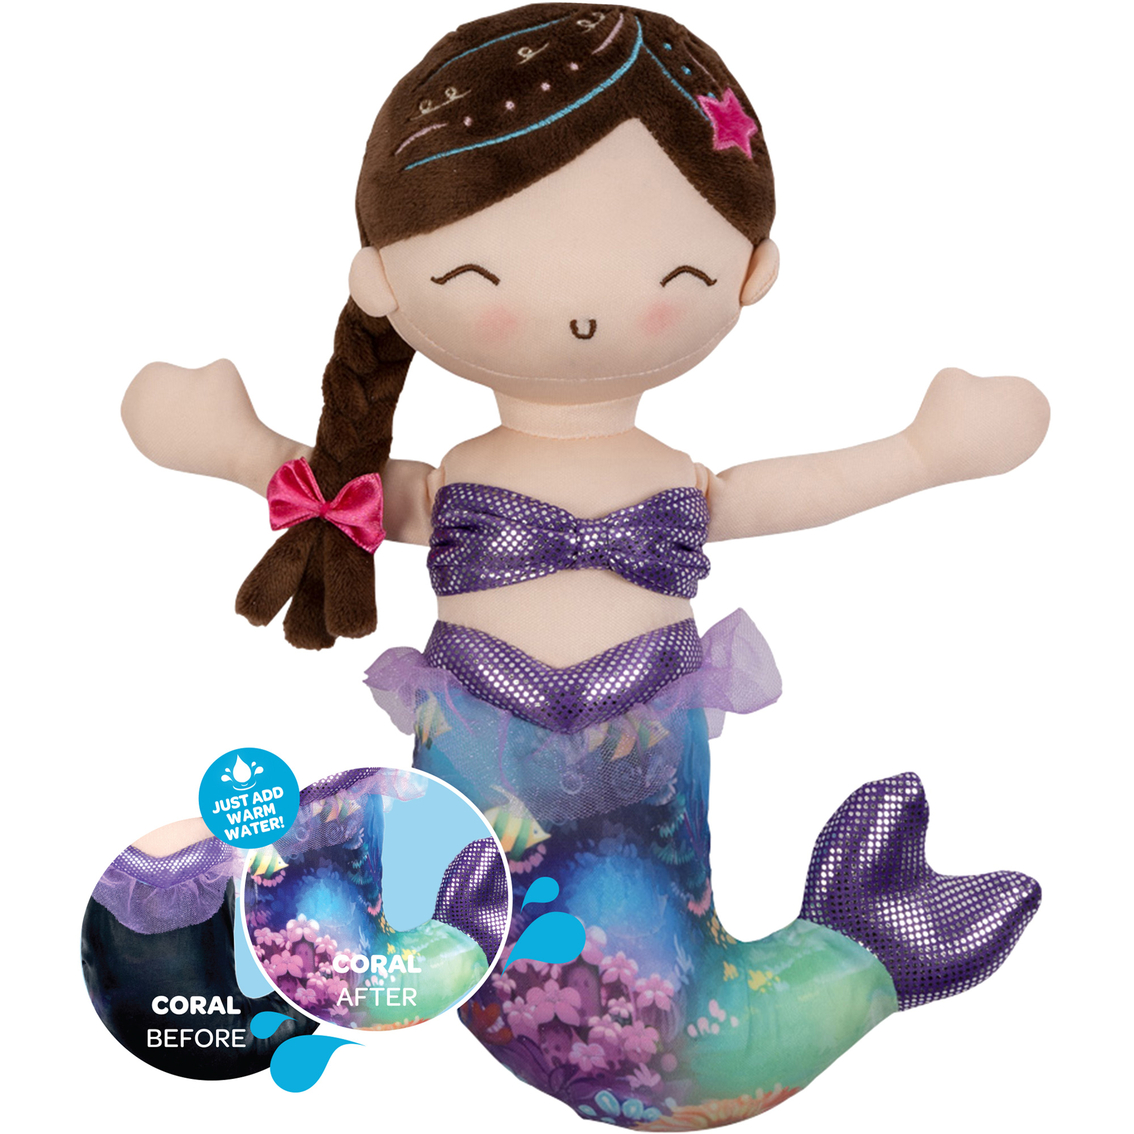 Adora Mermaid Magic Doll Coral - Image 2 of 5